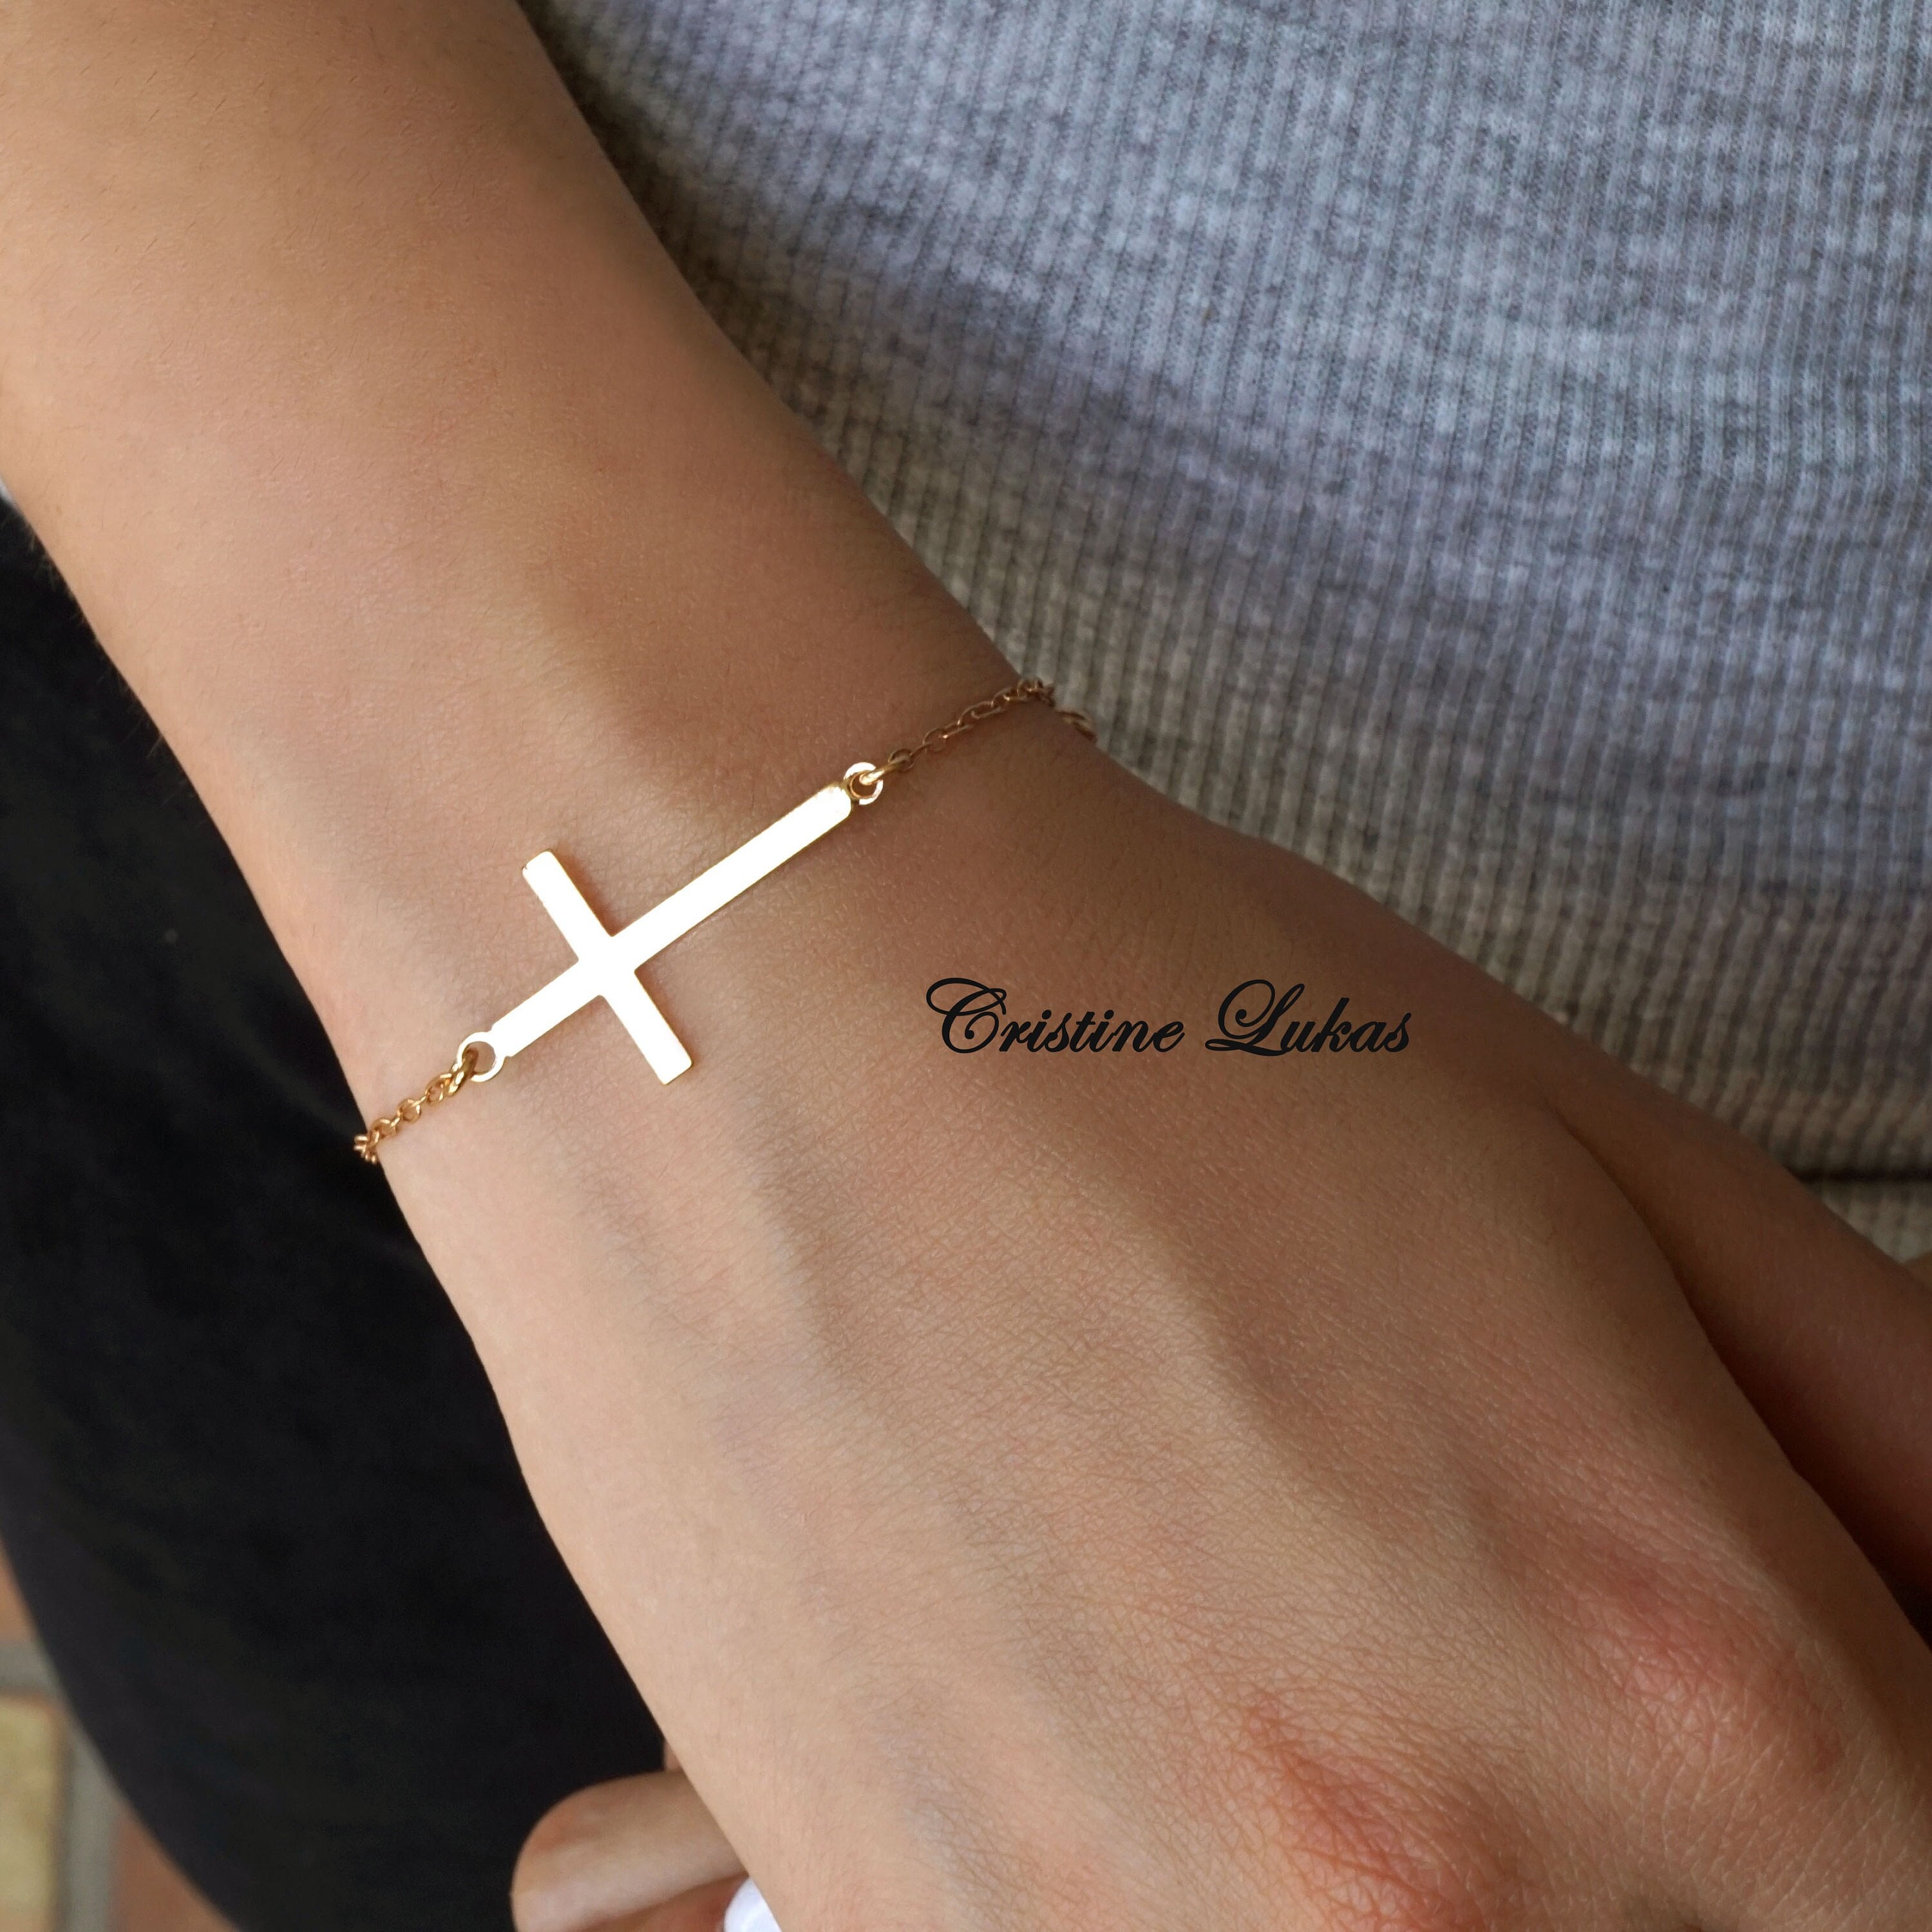 Faith tattoo intertwined with a cross | Faith tattoo, Tattoos, Cross tattoo